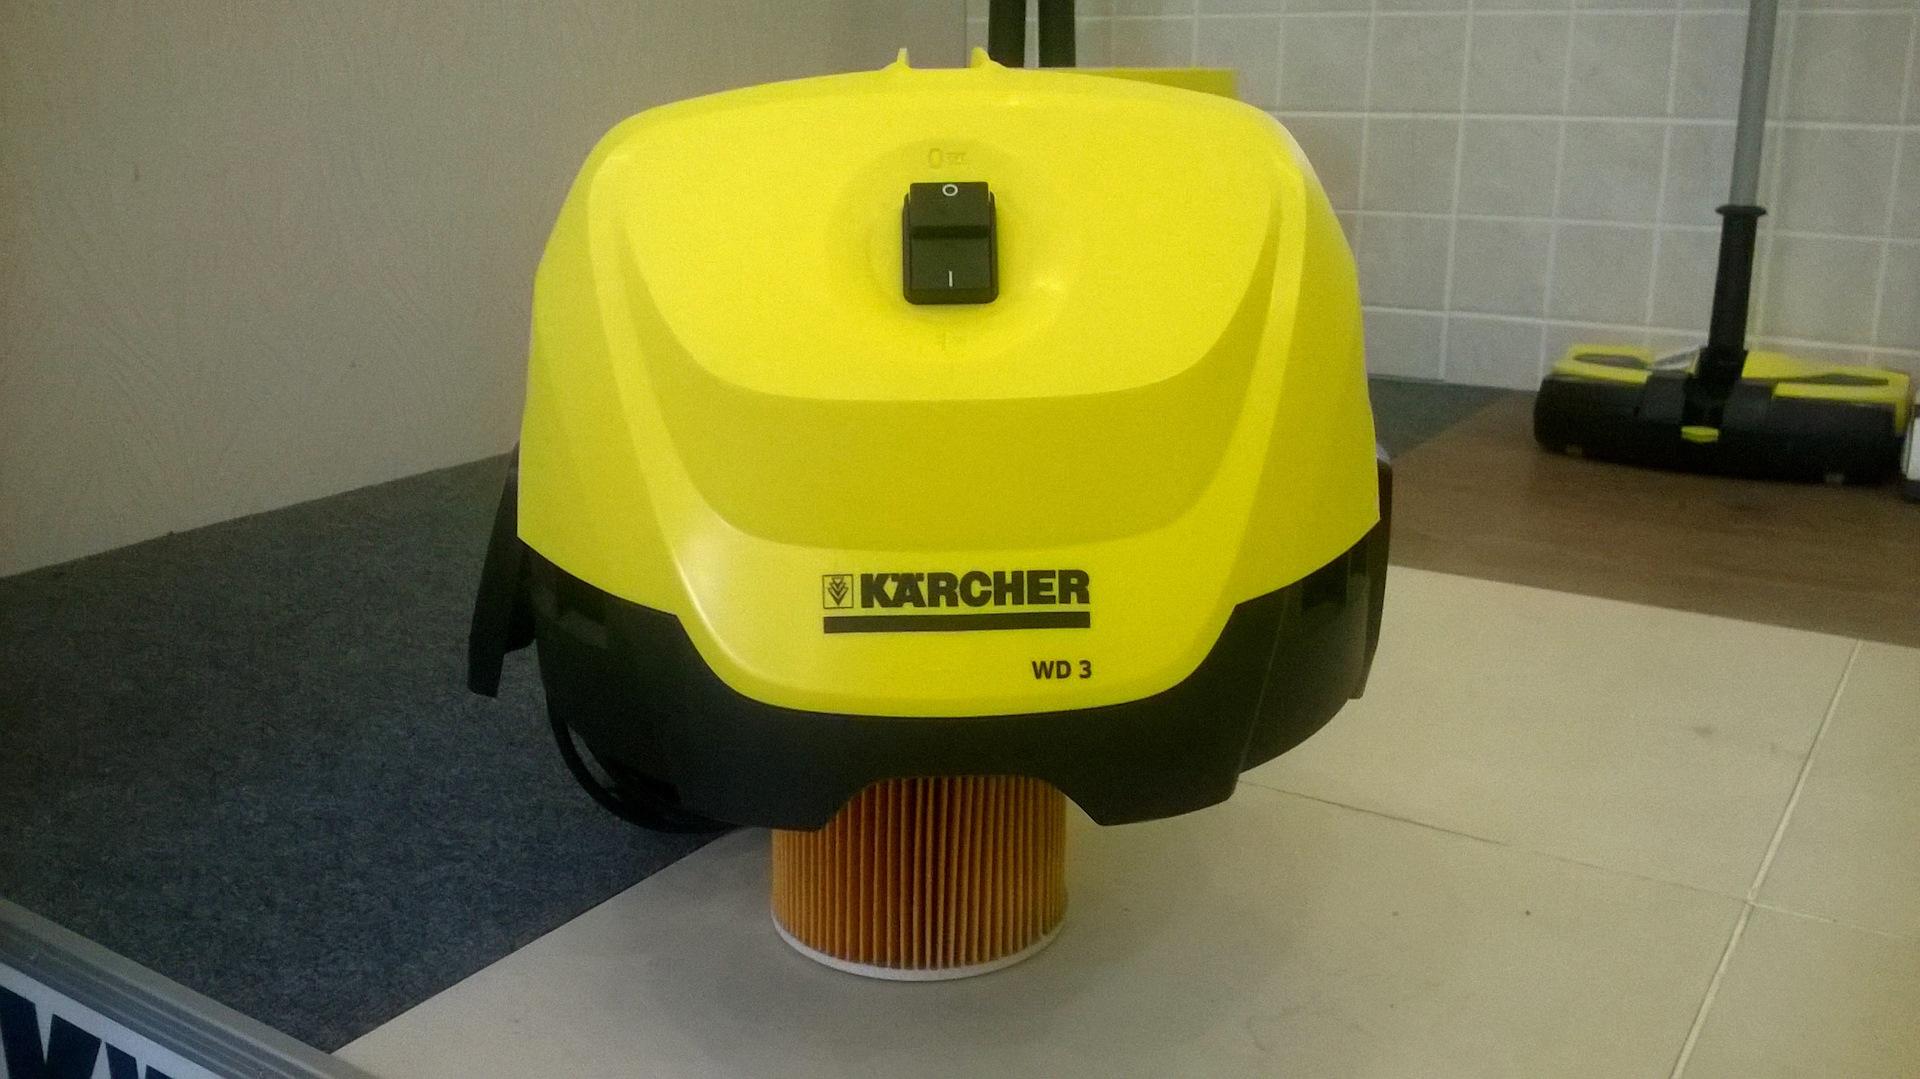 Керхер вд 2. Karcher wd2 Plus циклон. Пылесос Karcher WD 2 Plus. Wd3300 Karcher. Хозяйственный пылесос Karcher WD 2.